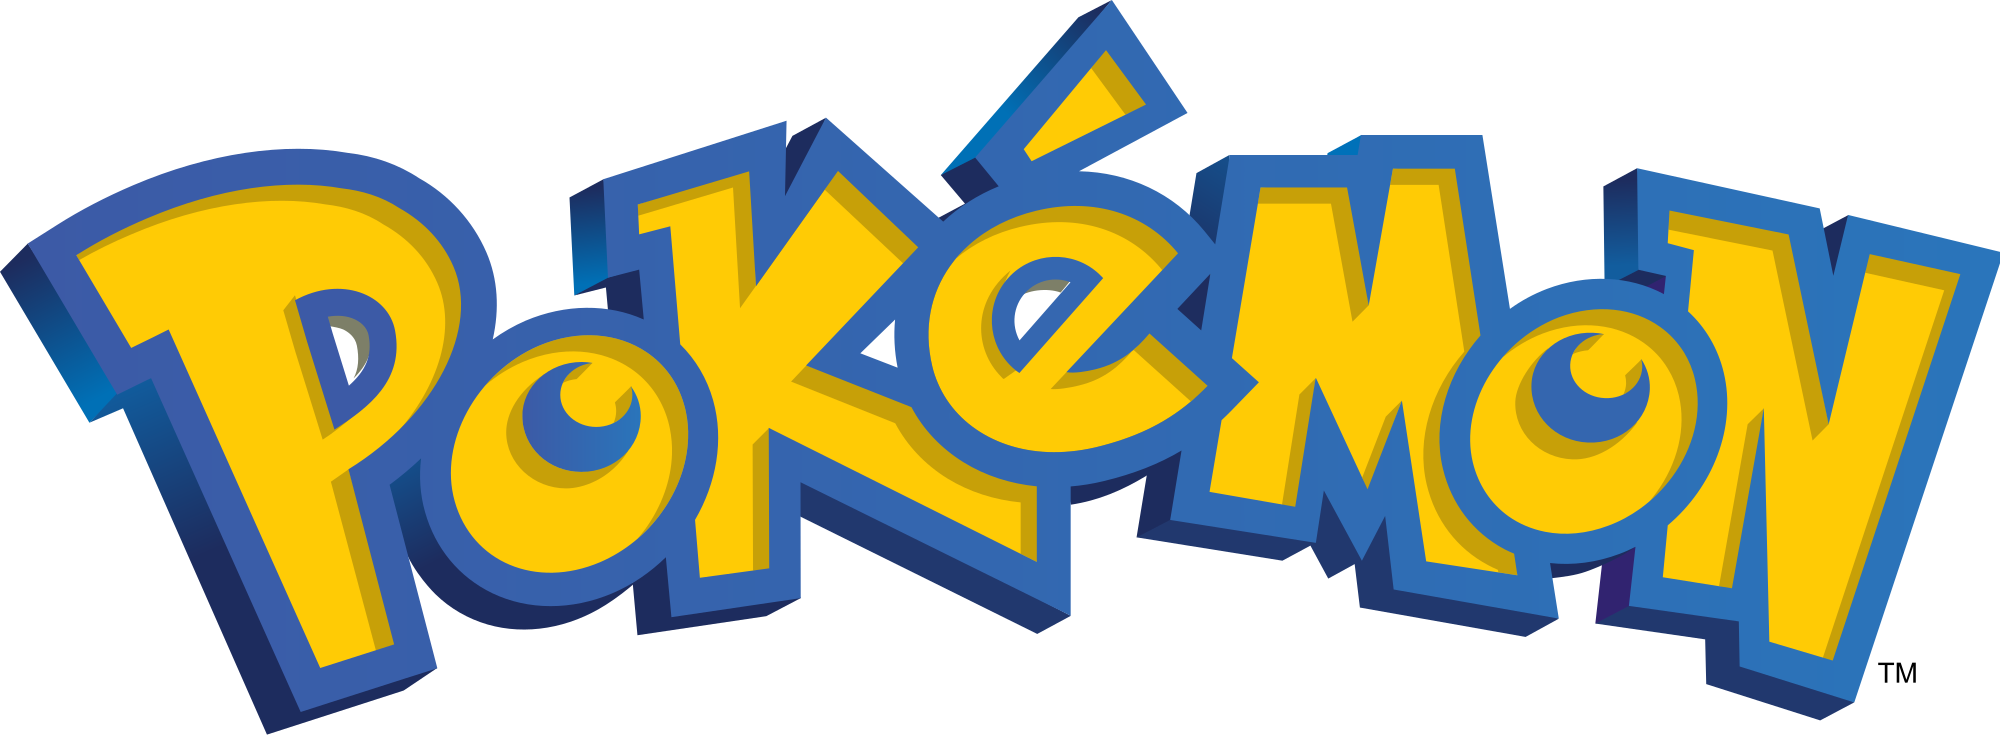 Pokemon Logo PNG Transparent Pokemon Logo.PNG Images ...